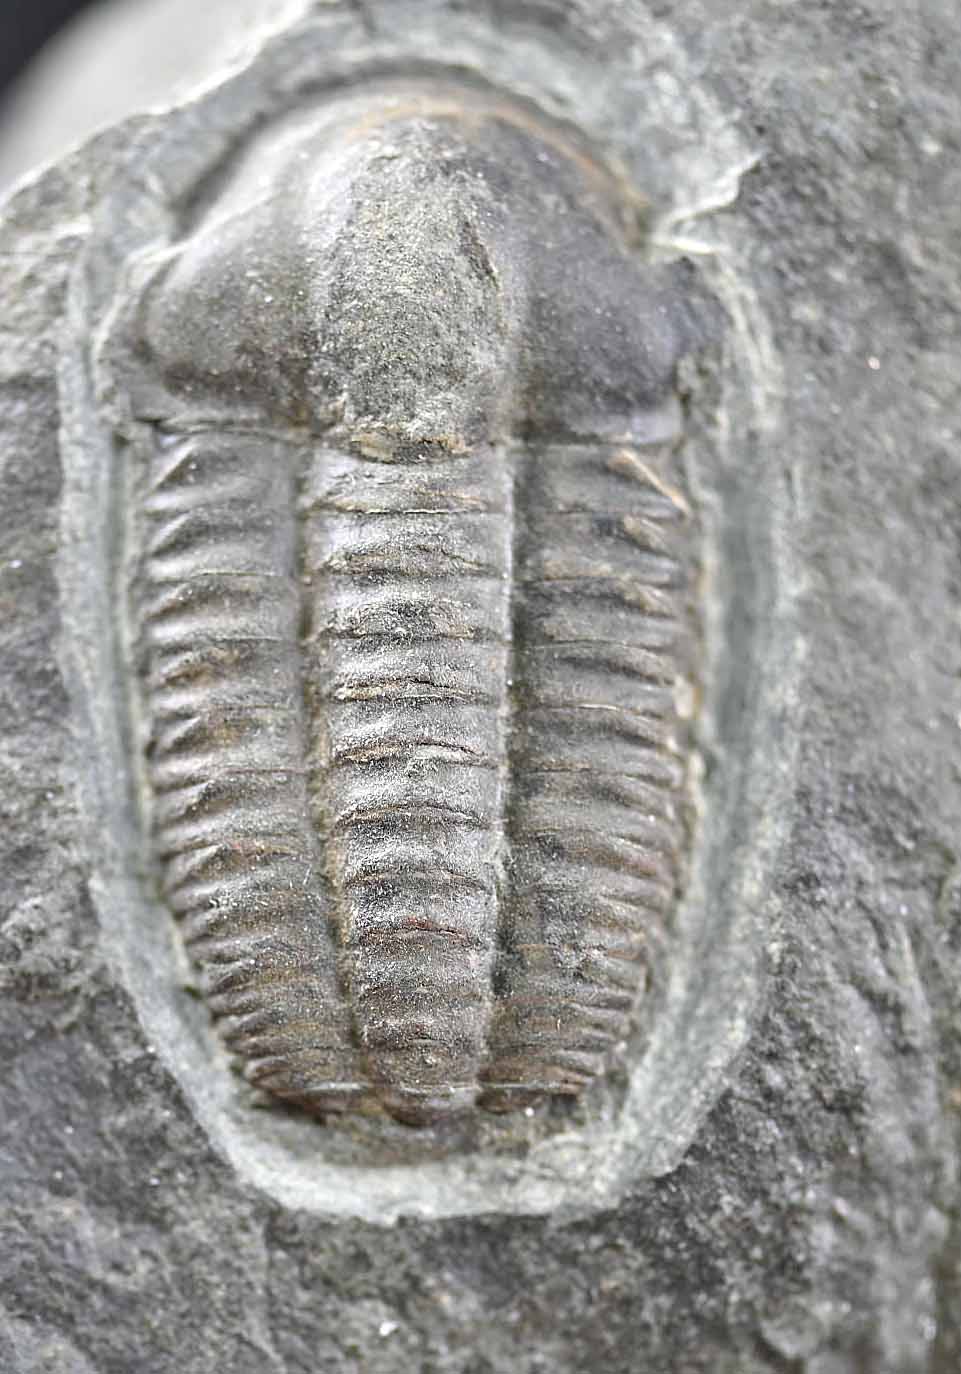 Ellipsocephalus hoffi